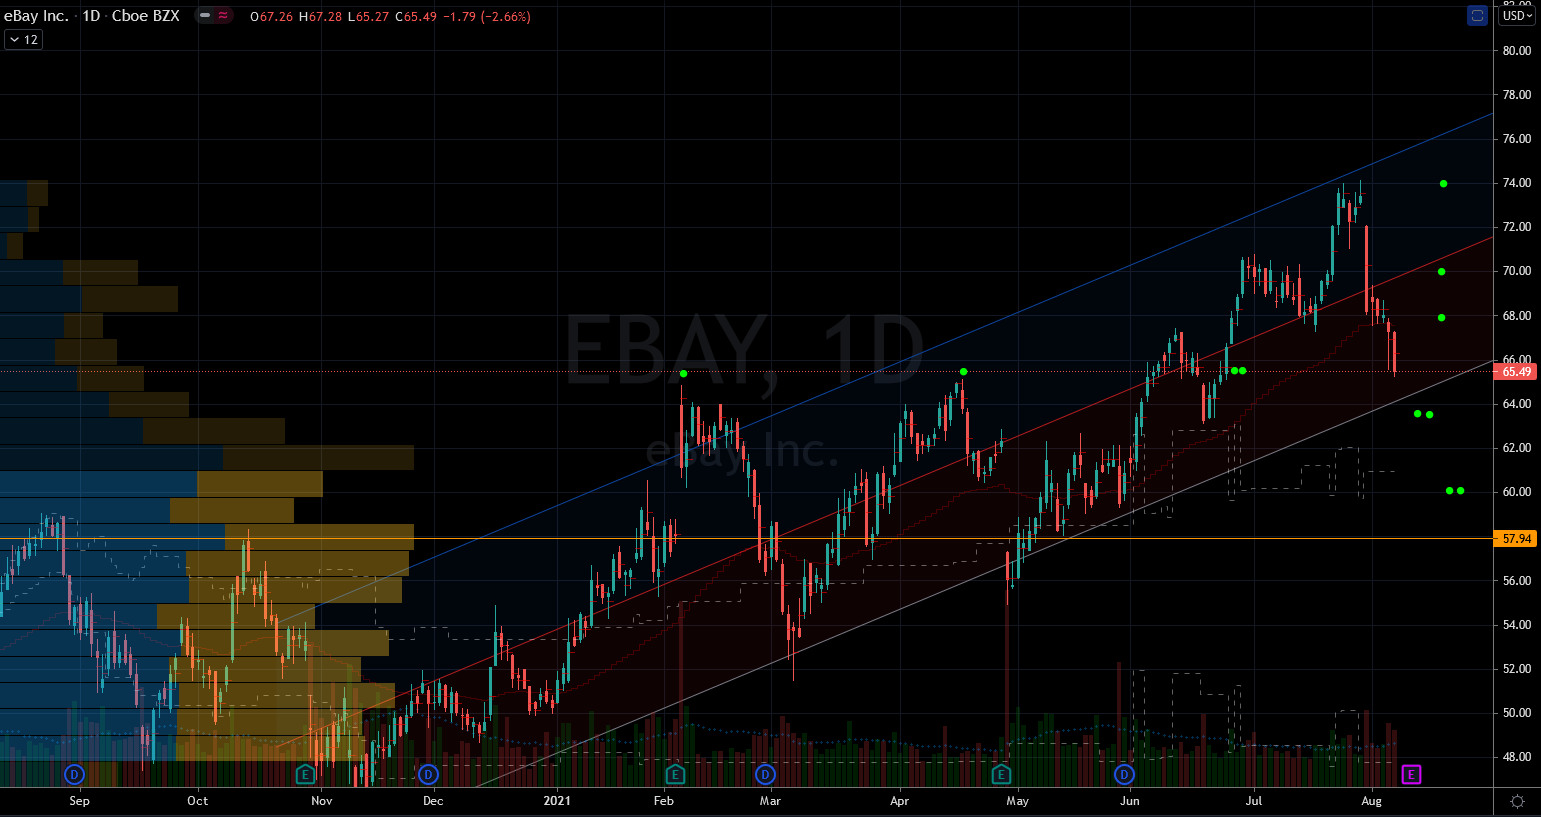 Stocks to Buy: Ebay (EBAY) Stock Chart Showing Rally Opportunity